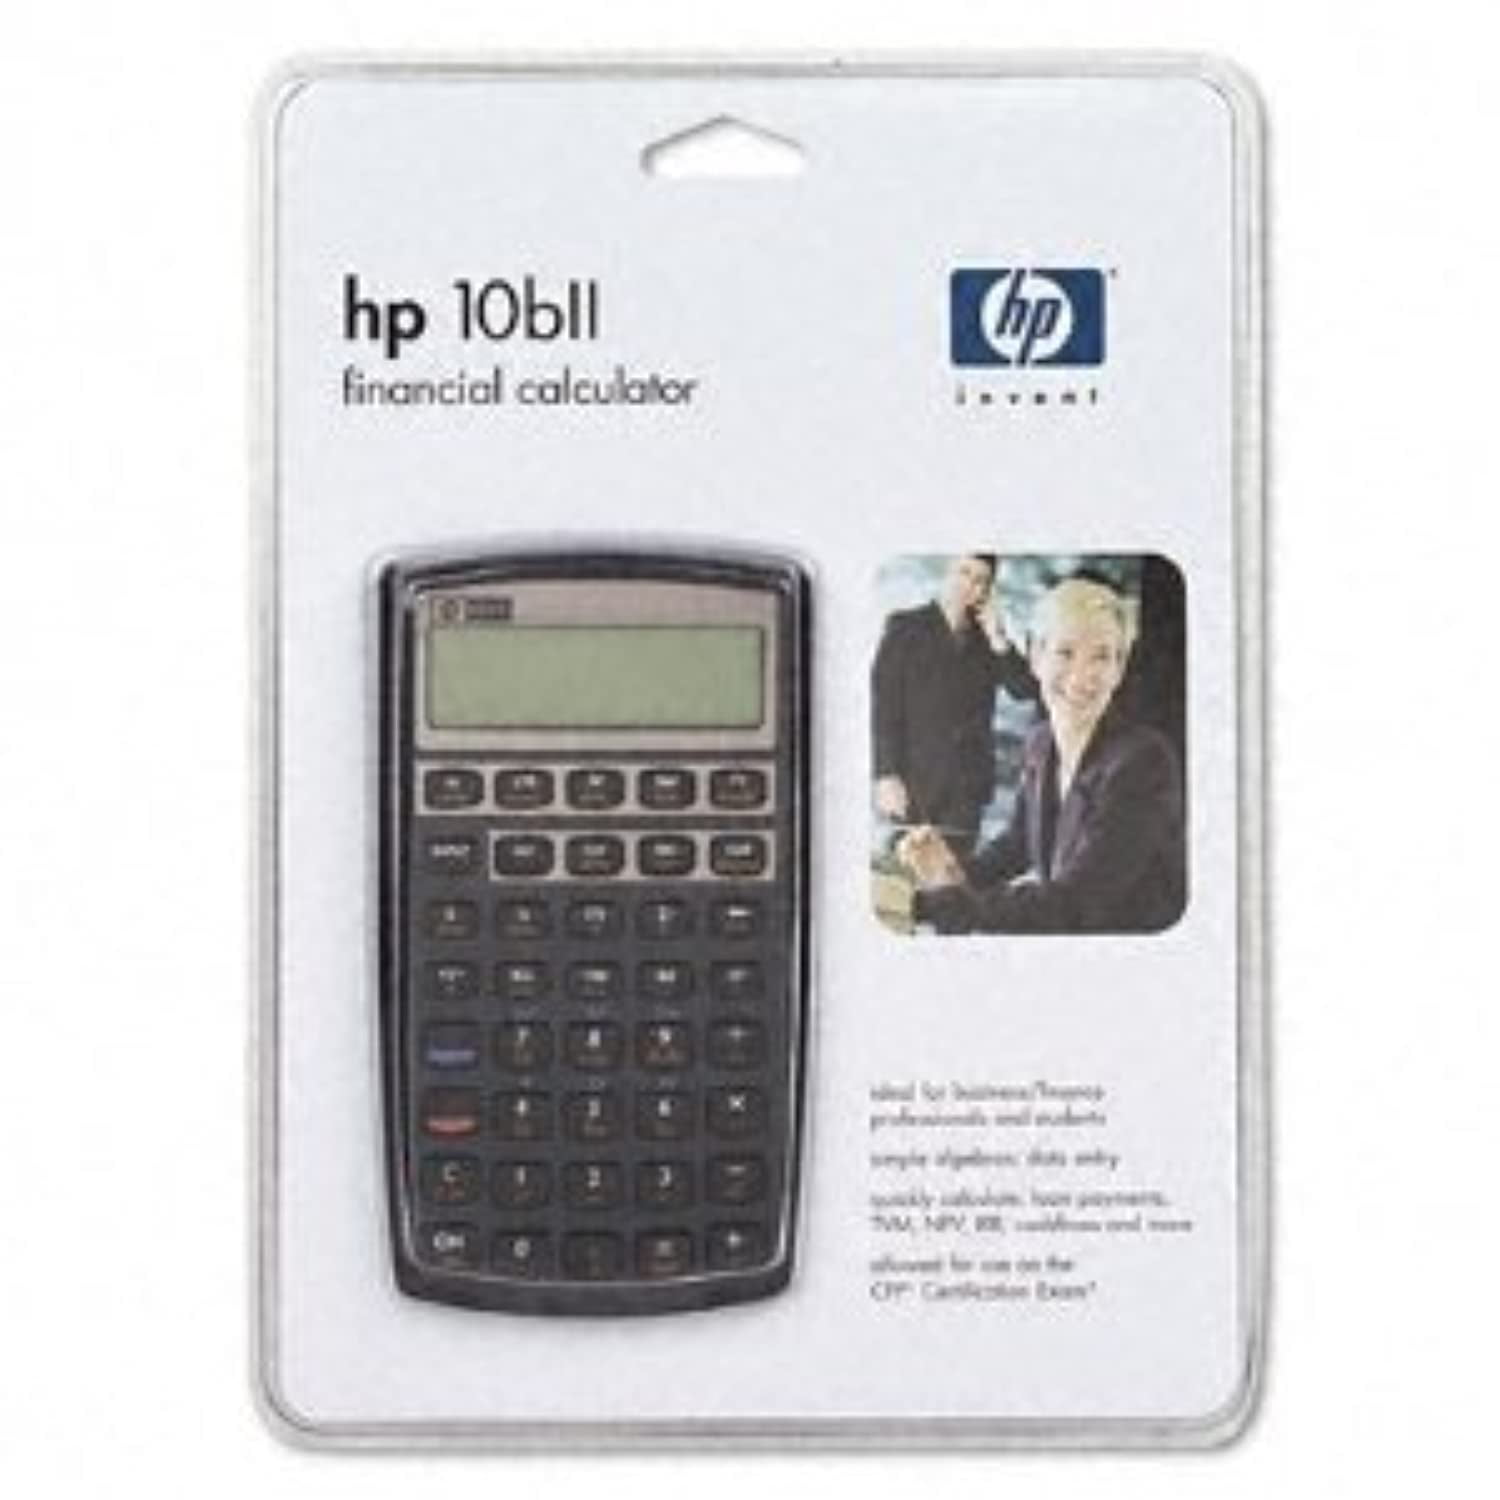 hp 10bii financial calculator stocks